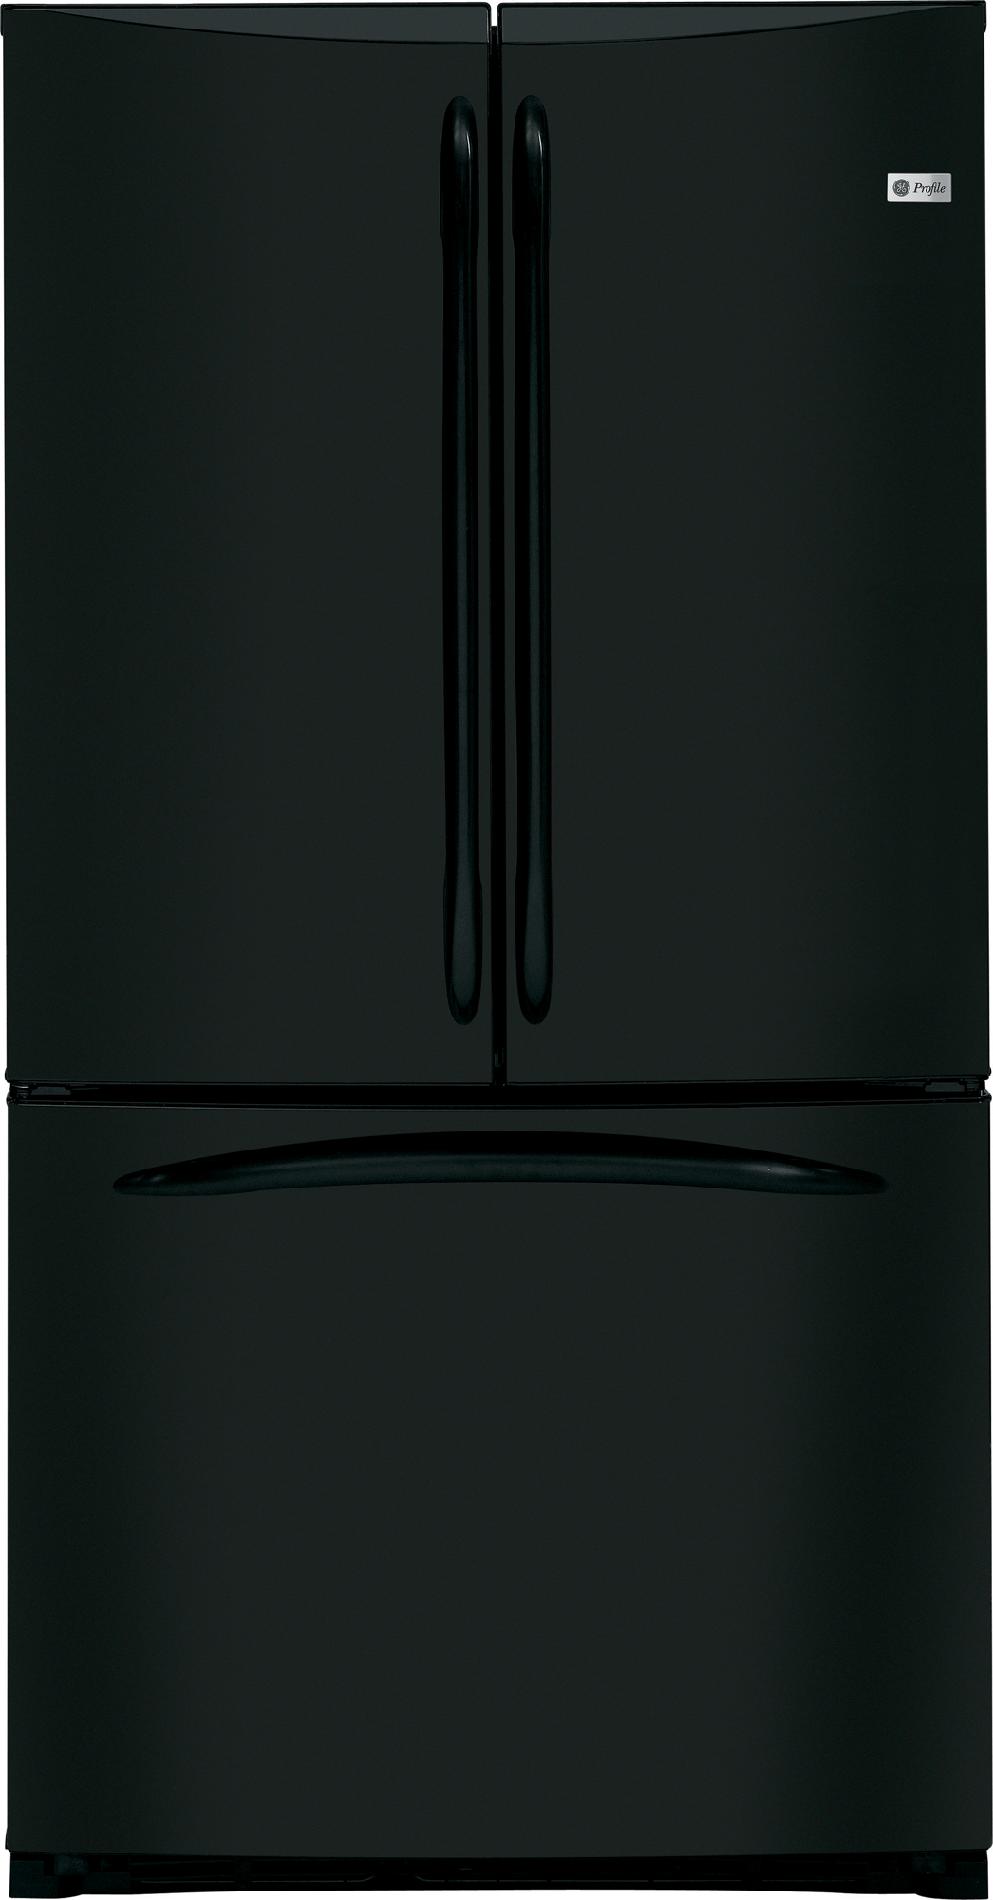 GE Profile Series 20.7 cu. ft. Counter-Depth French Door Refrigerator - Black